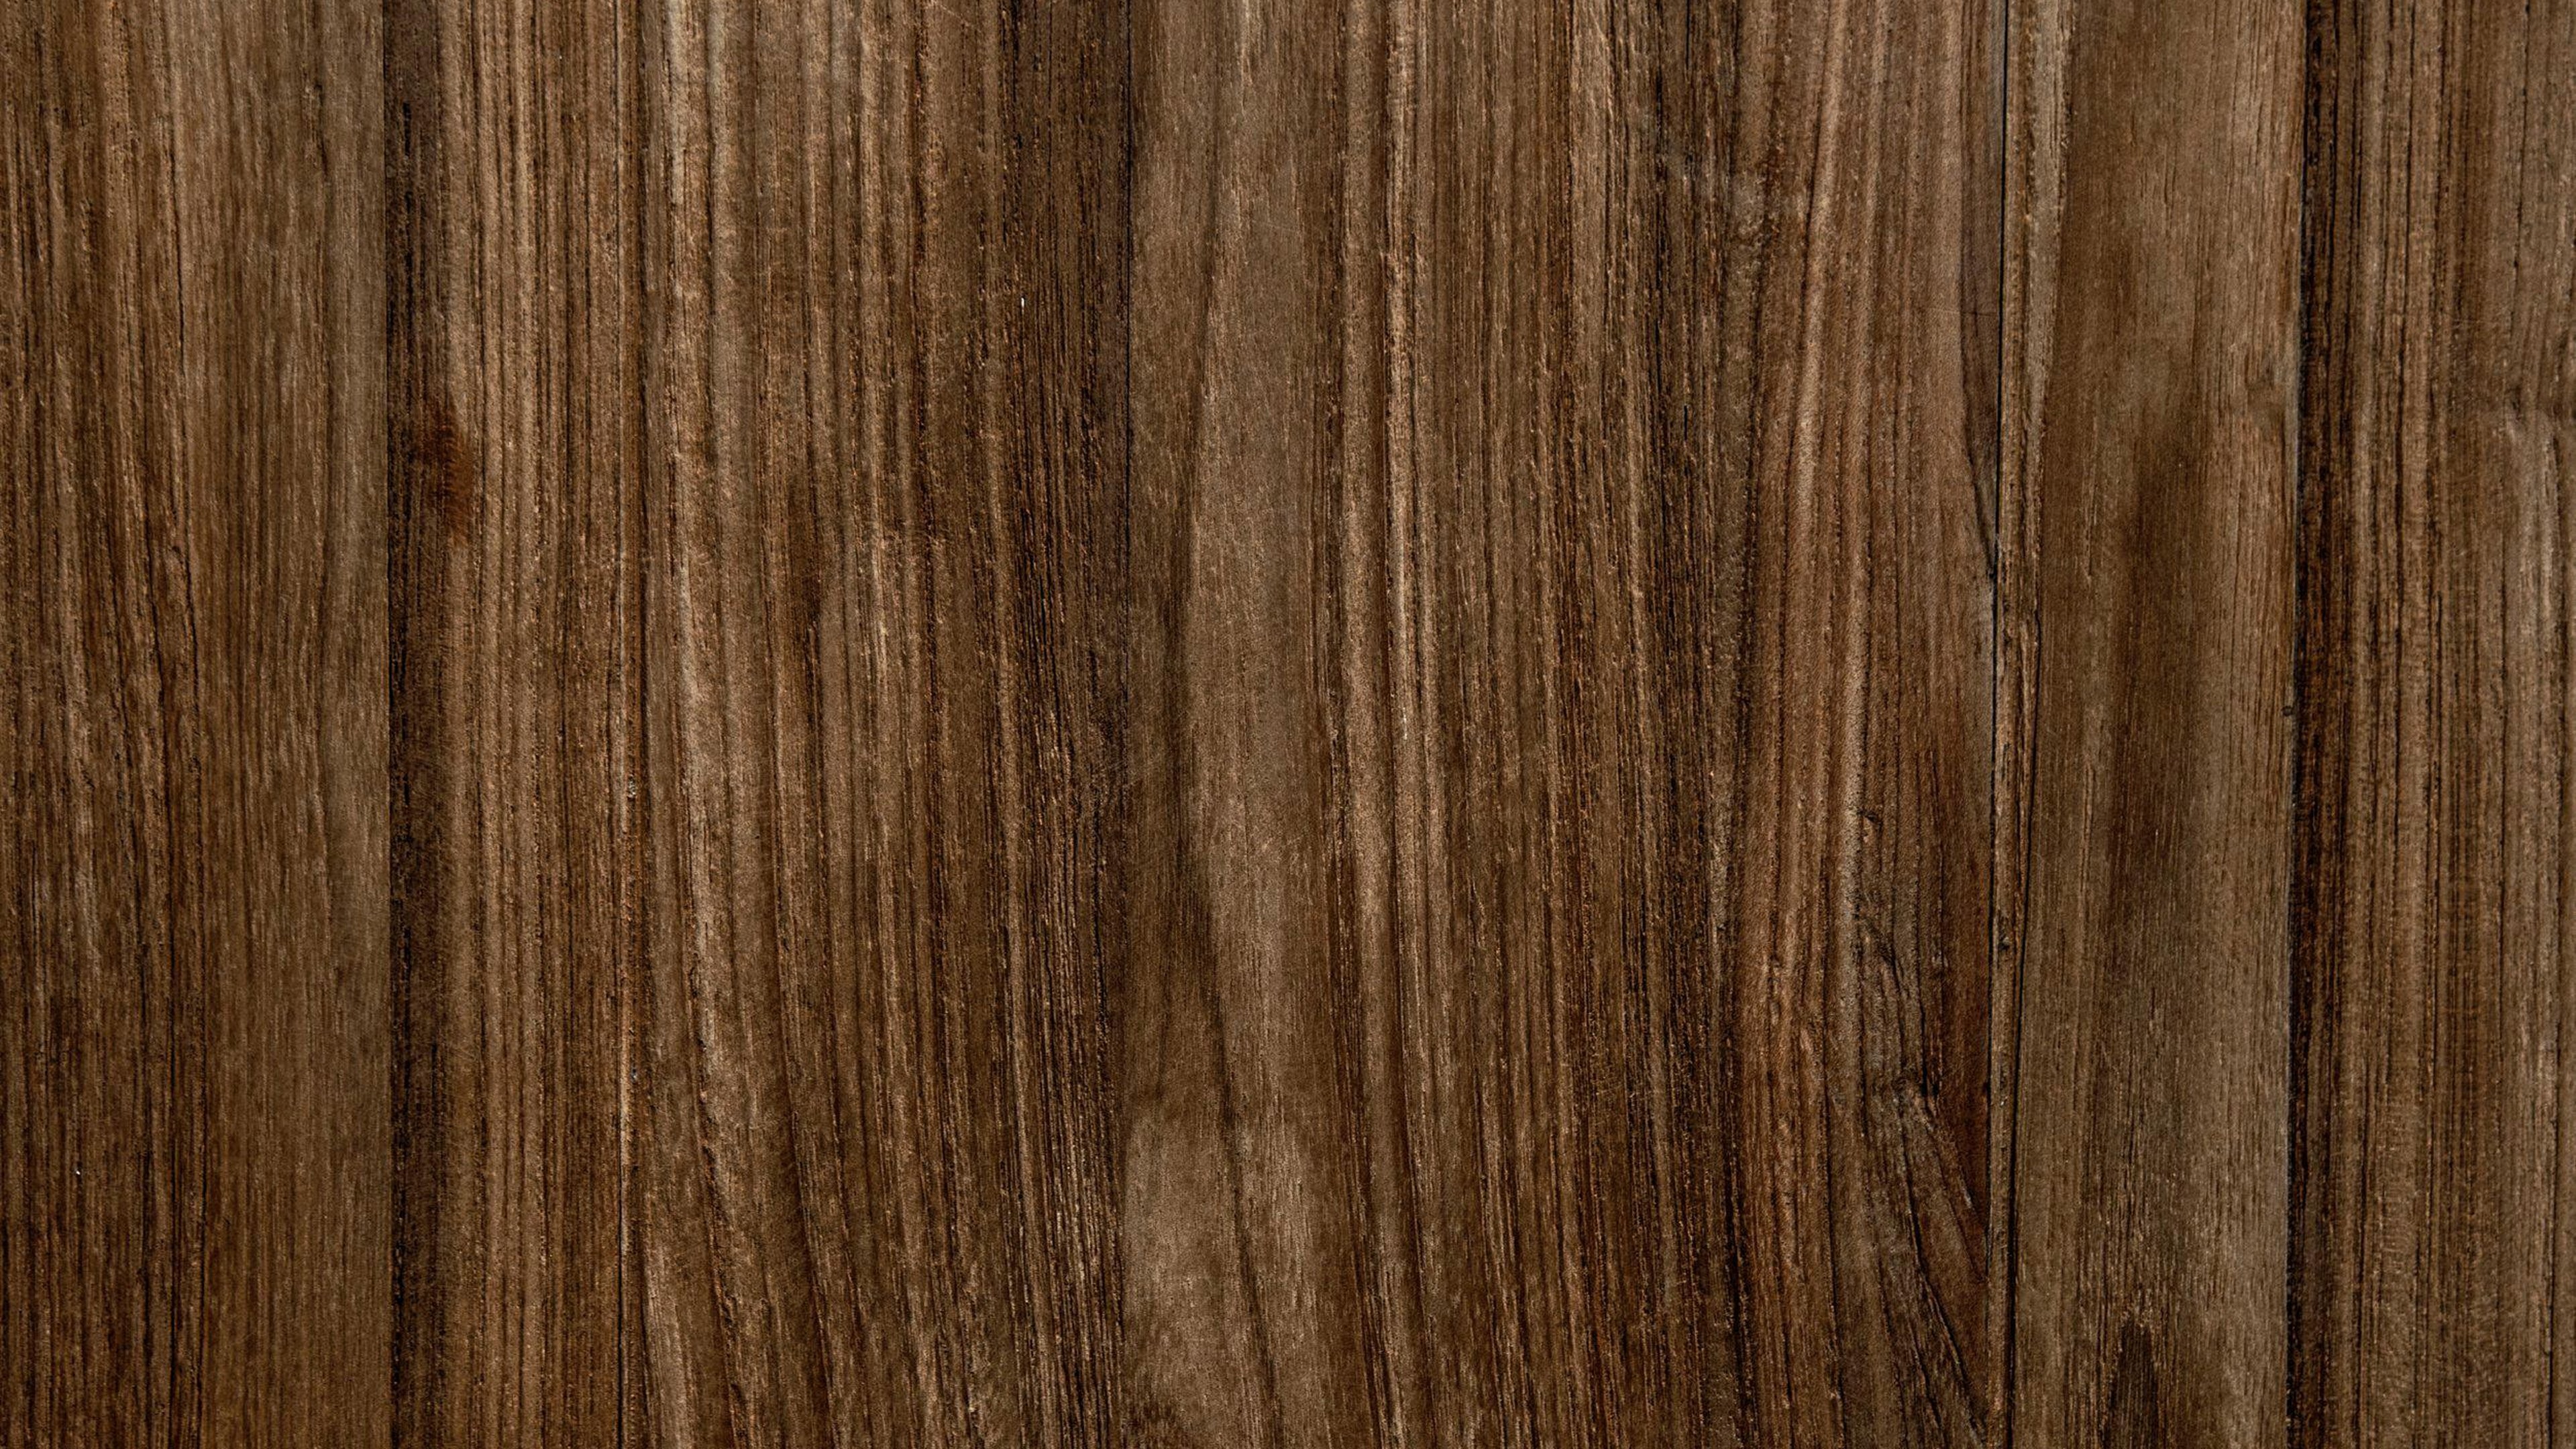 3840x2160, 4k Uhd - Background Brown Wood Texture - 3840x2160 Wallpaper -  